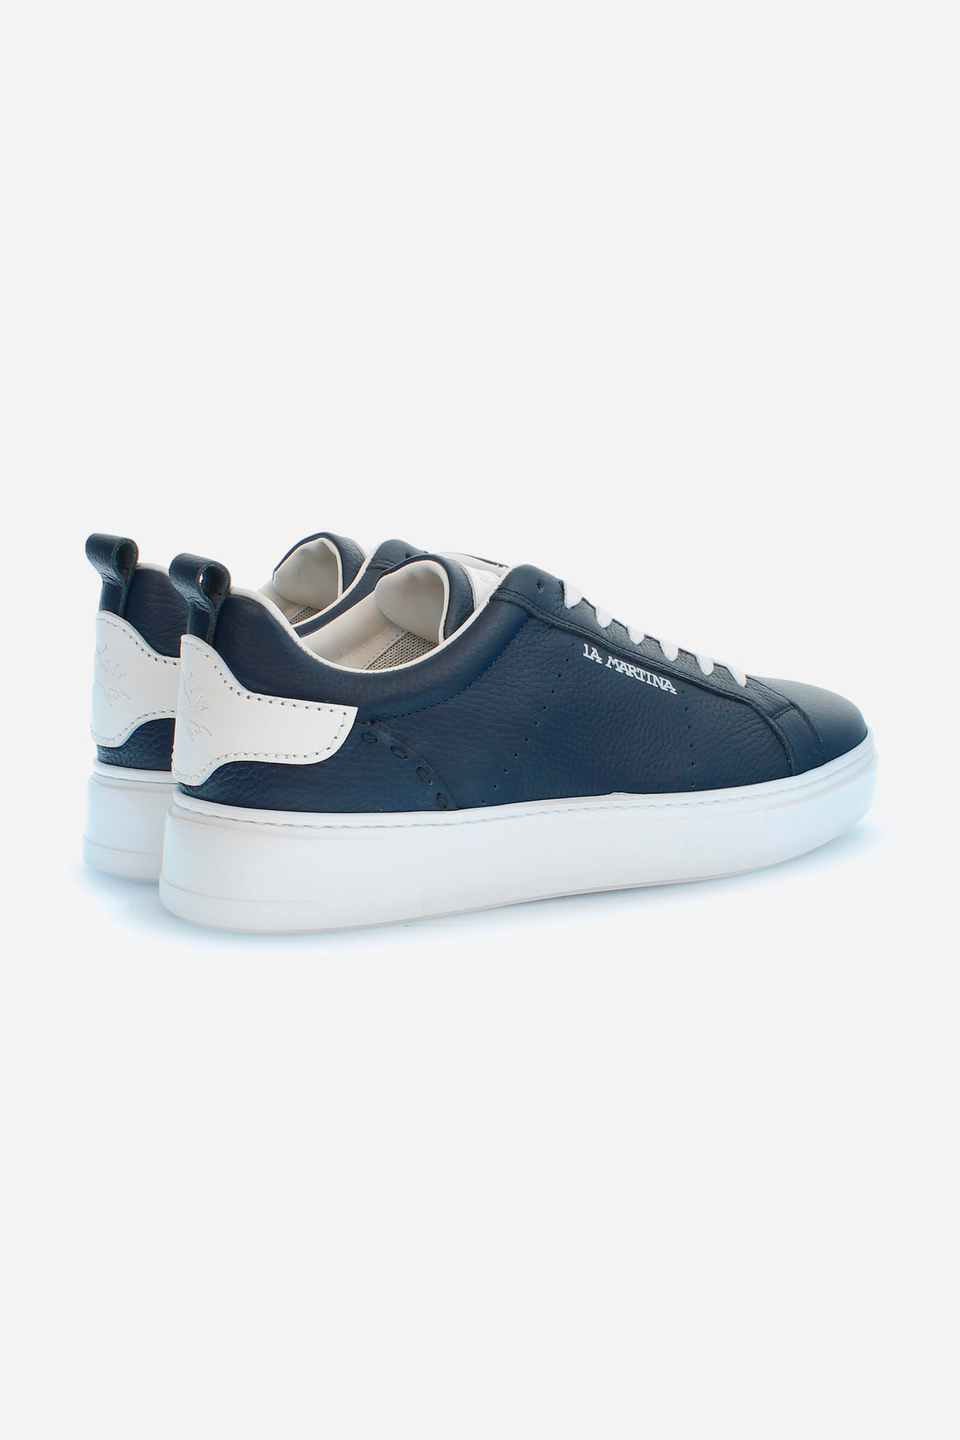 Herren-Sneaker aus Leder | La Martina - Official Online Shop